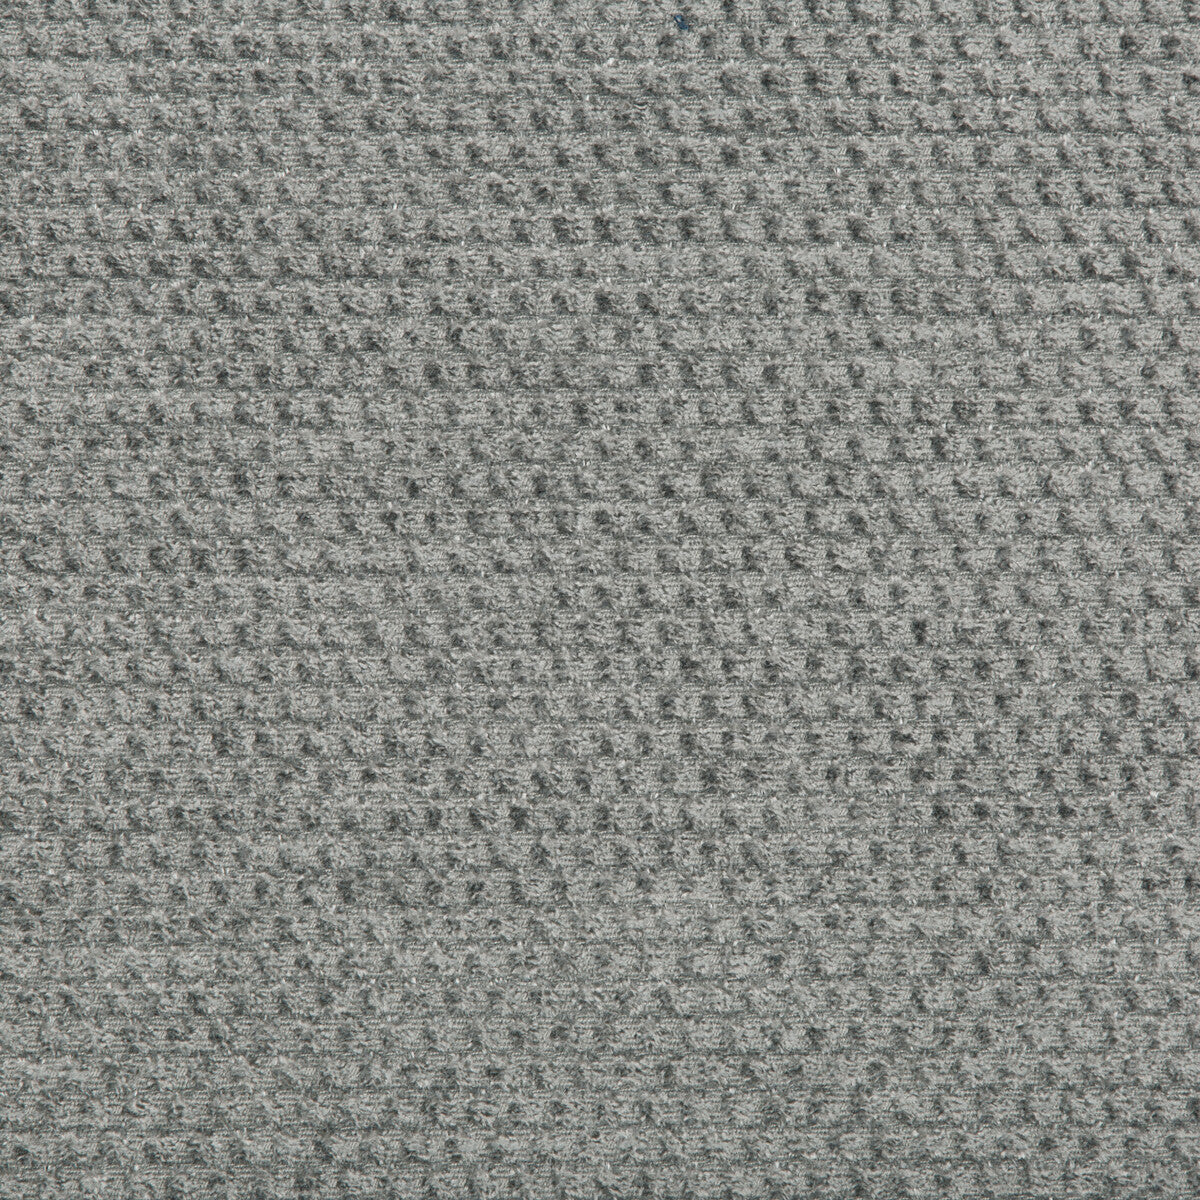 Kravet Smart fabric in 35321-21 color - pattern 35321.21.0 - by Kravet Smart in the Performance Kravetarmor collection